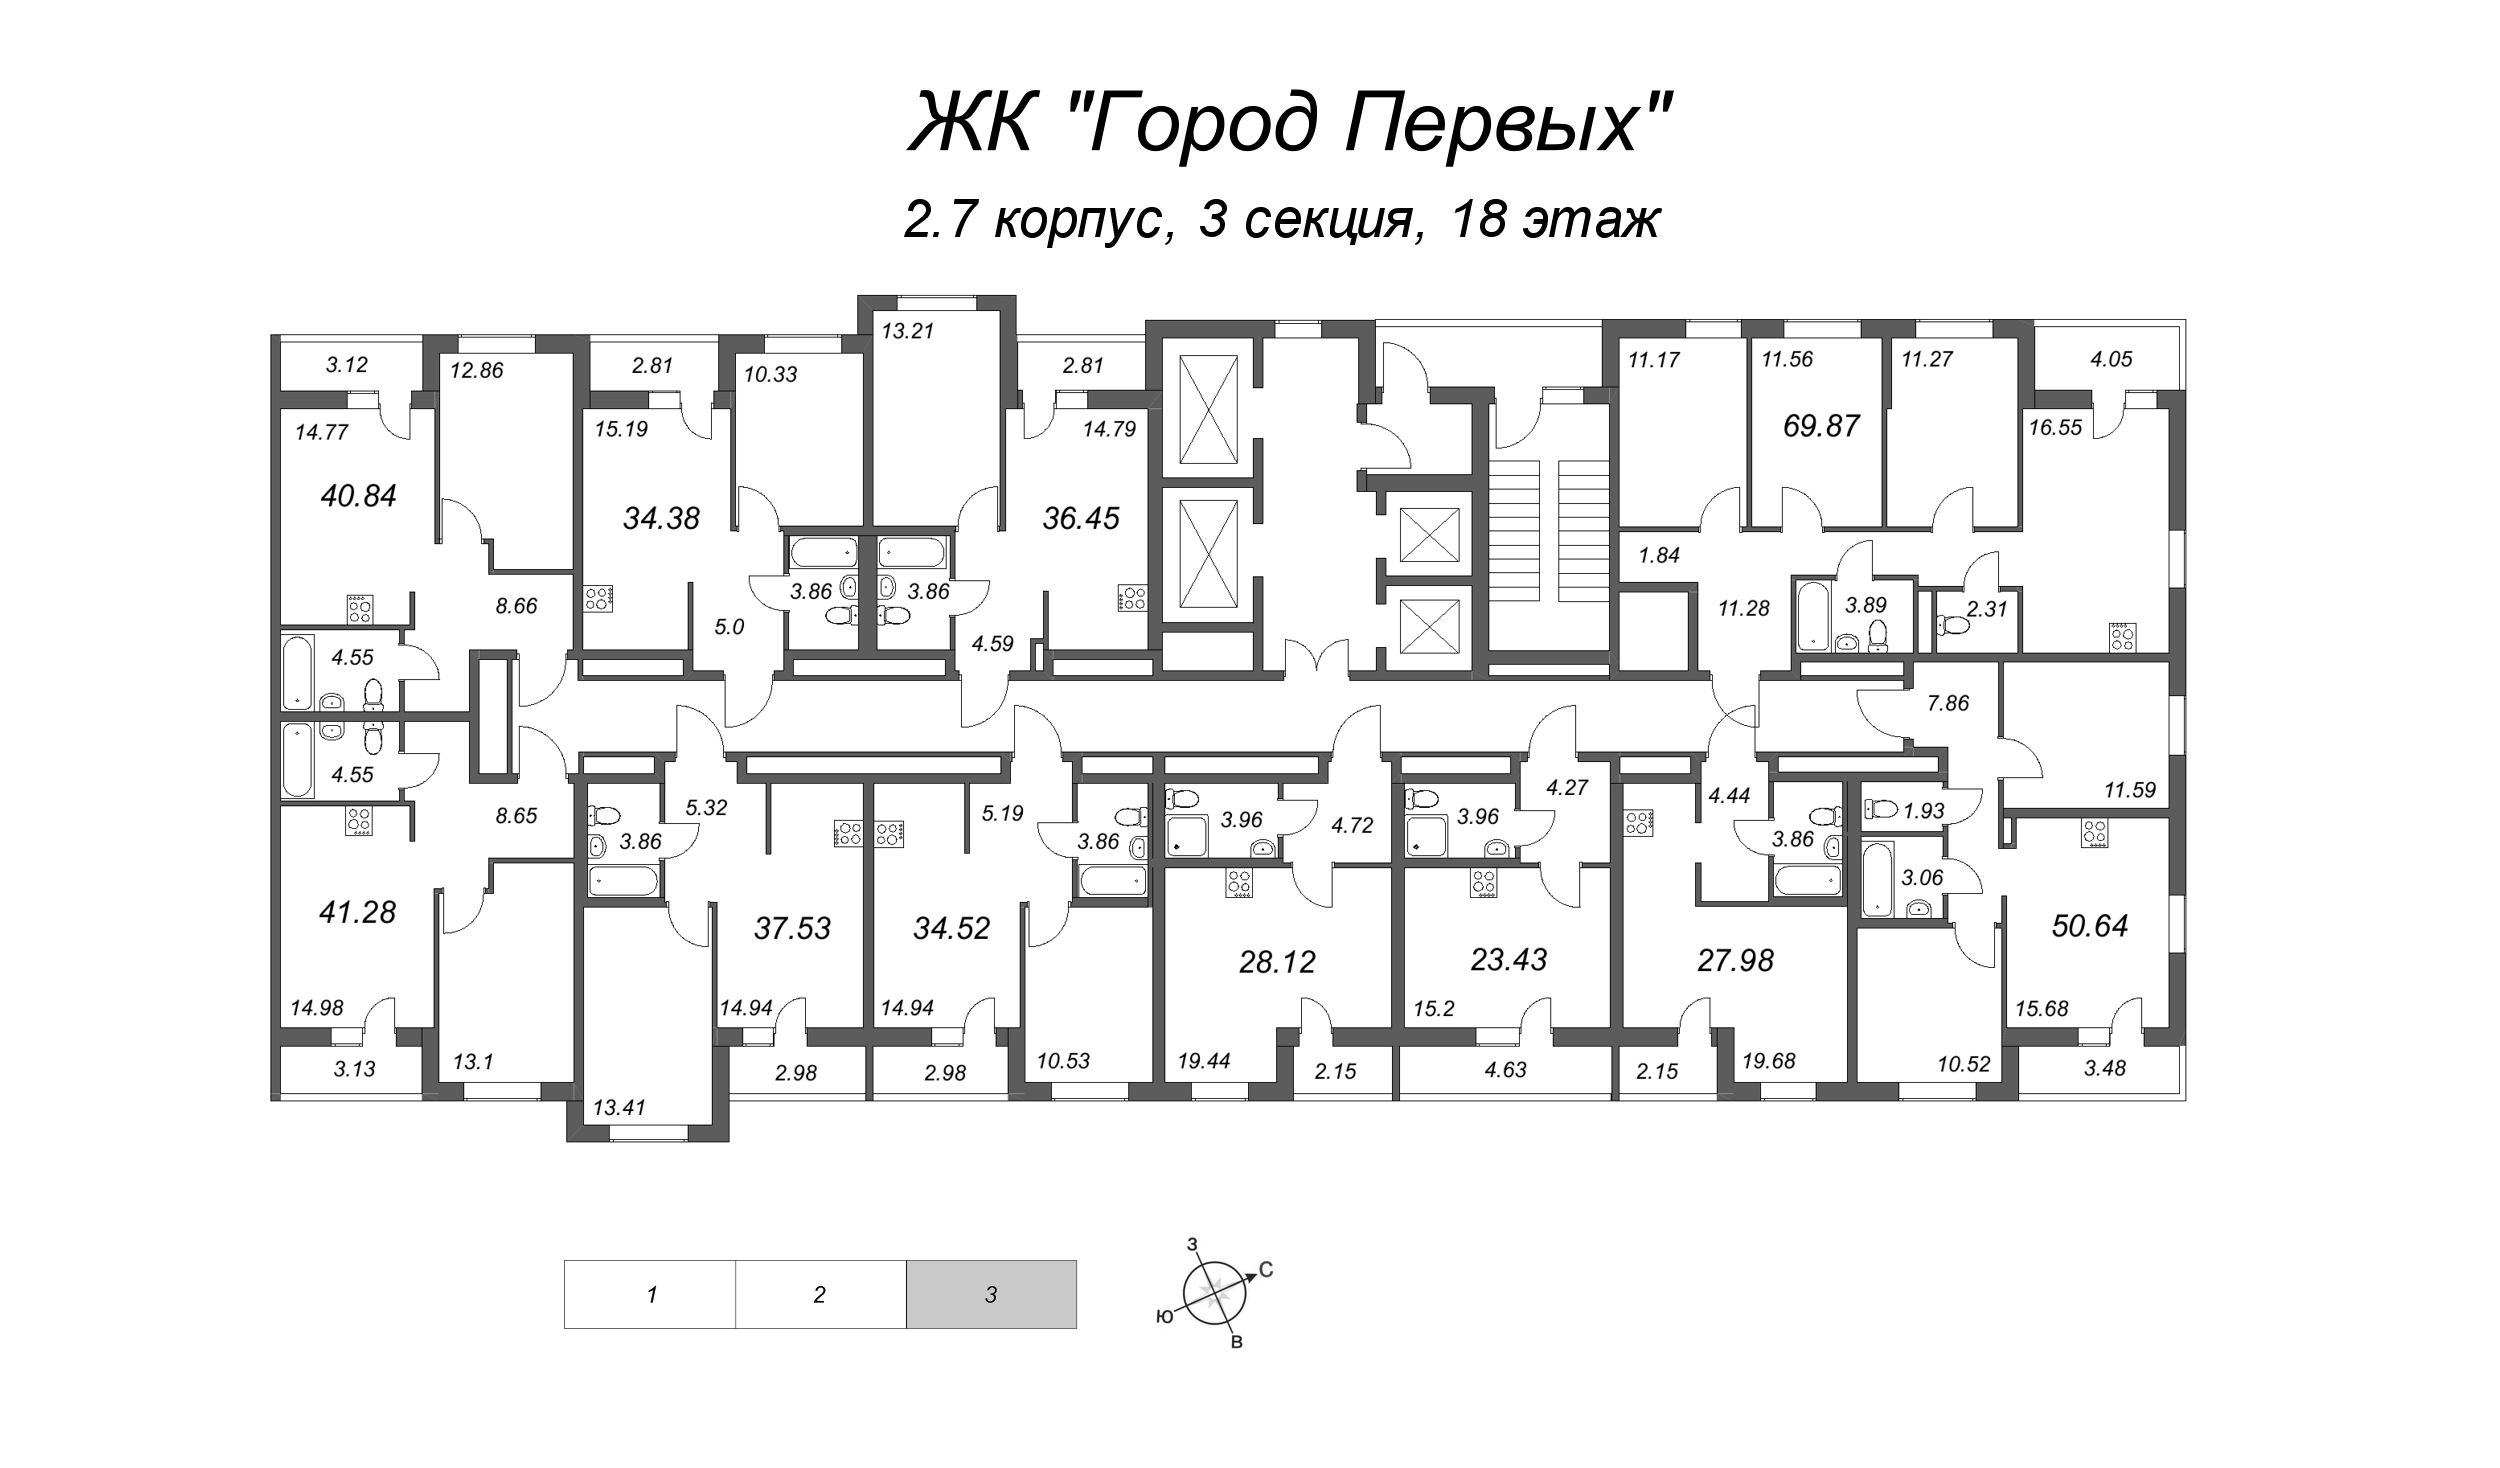 4-комнатная (Евро) квартира, 64.95 м² - планировка этажа